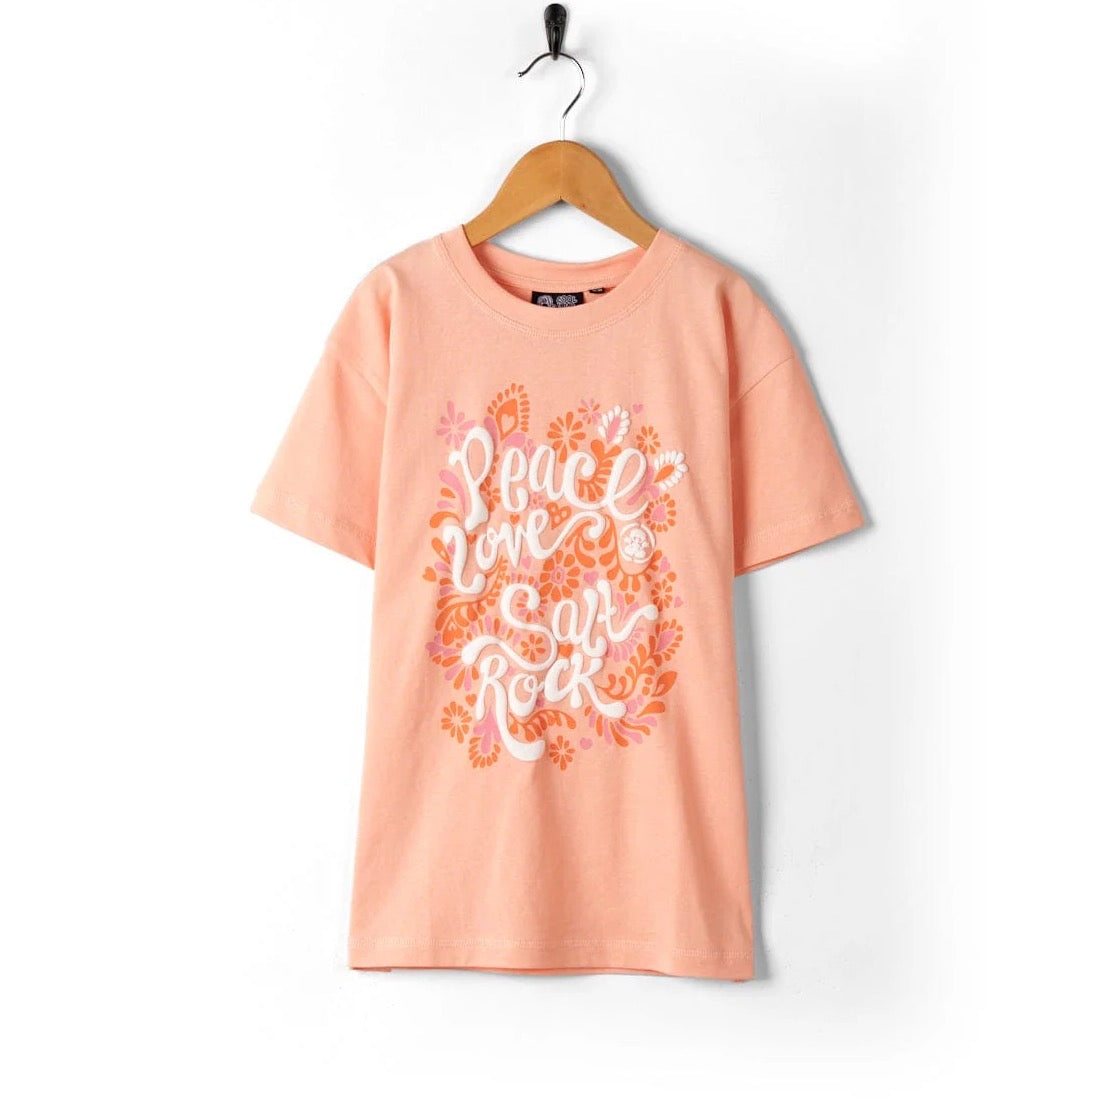 Saltrock Girls Peace Love T-Shirt Peach Clothing 7/8YRS / Peach,9/10YRS / Peach,11/12YRS / Peach,13YRS / Peach